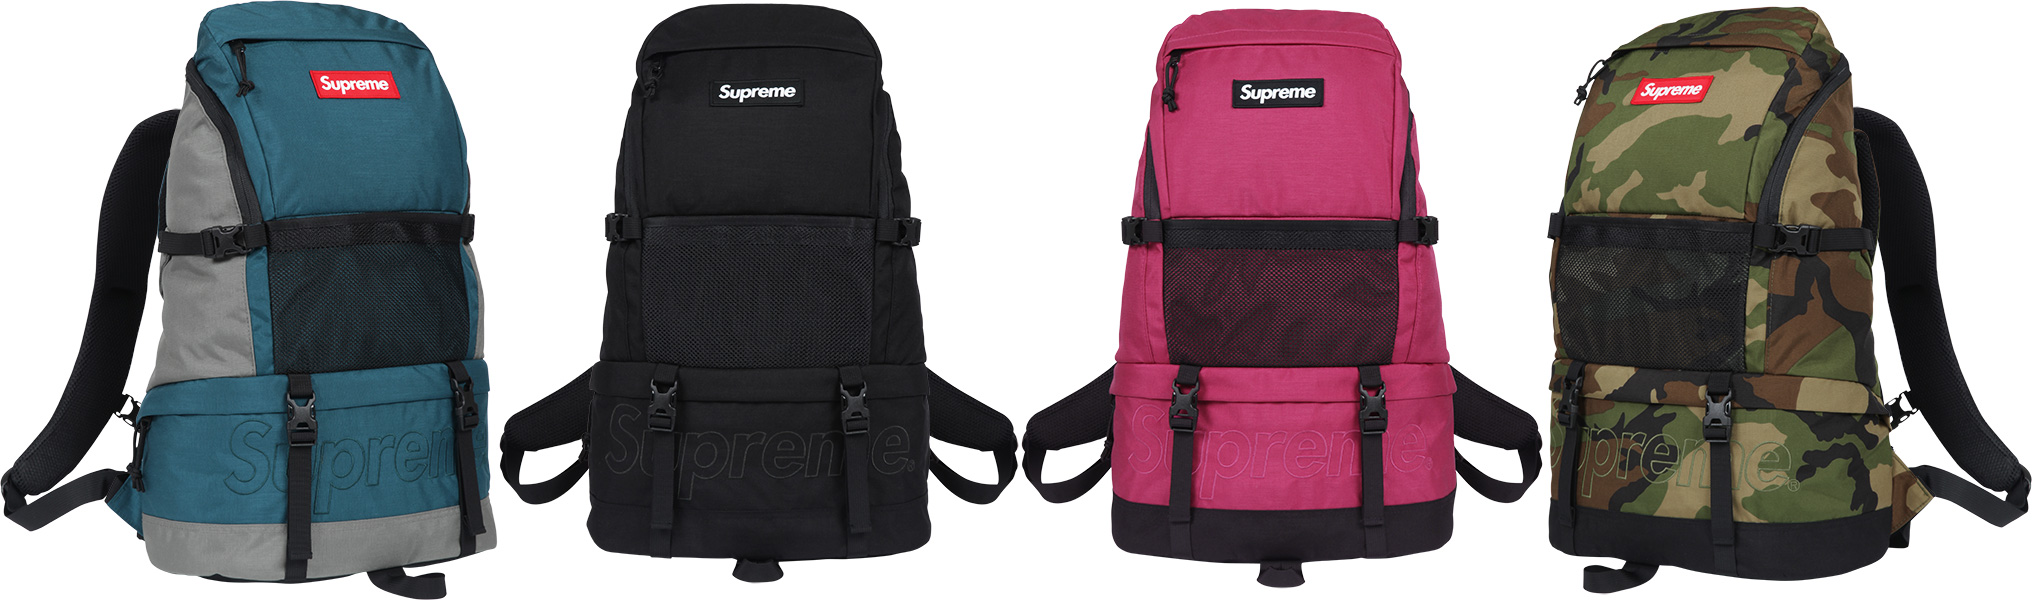 Supreme Contour Backpack 2015fw ρуρуρу